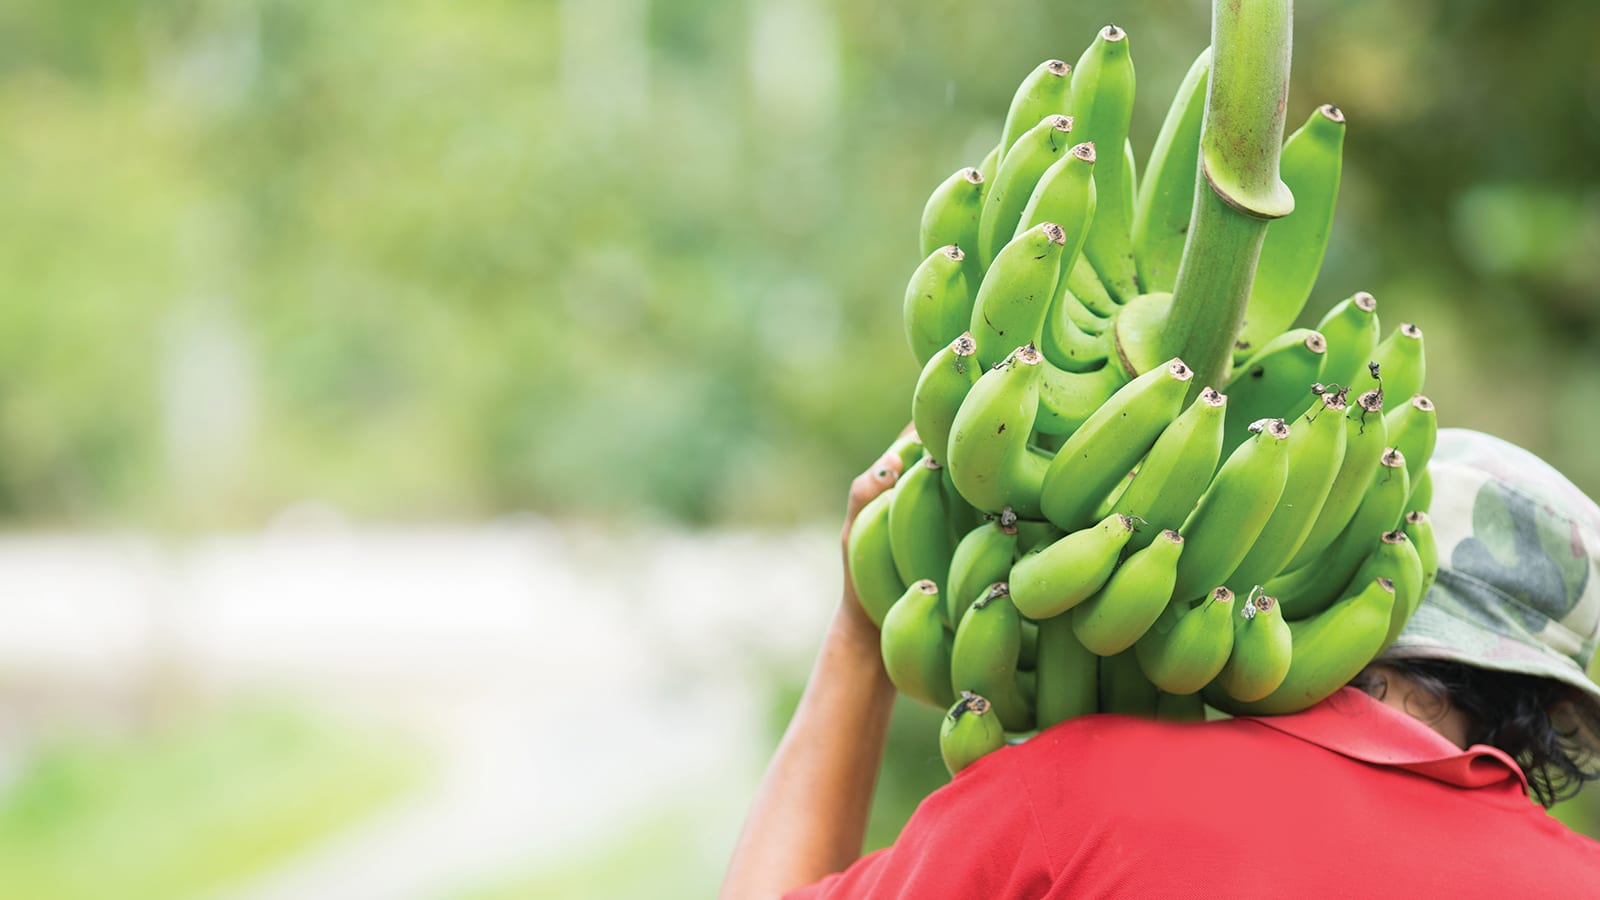 https://www.pccmarkets.com/wp-content/uploads/2018/09/st-man-carrying-bananas-1600.jpg